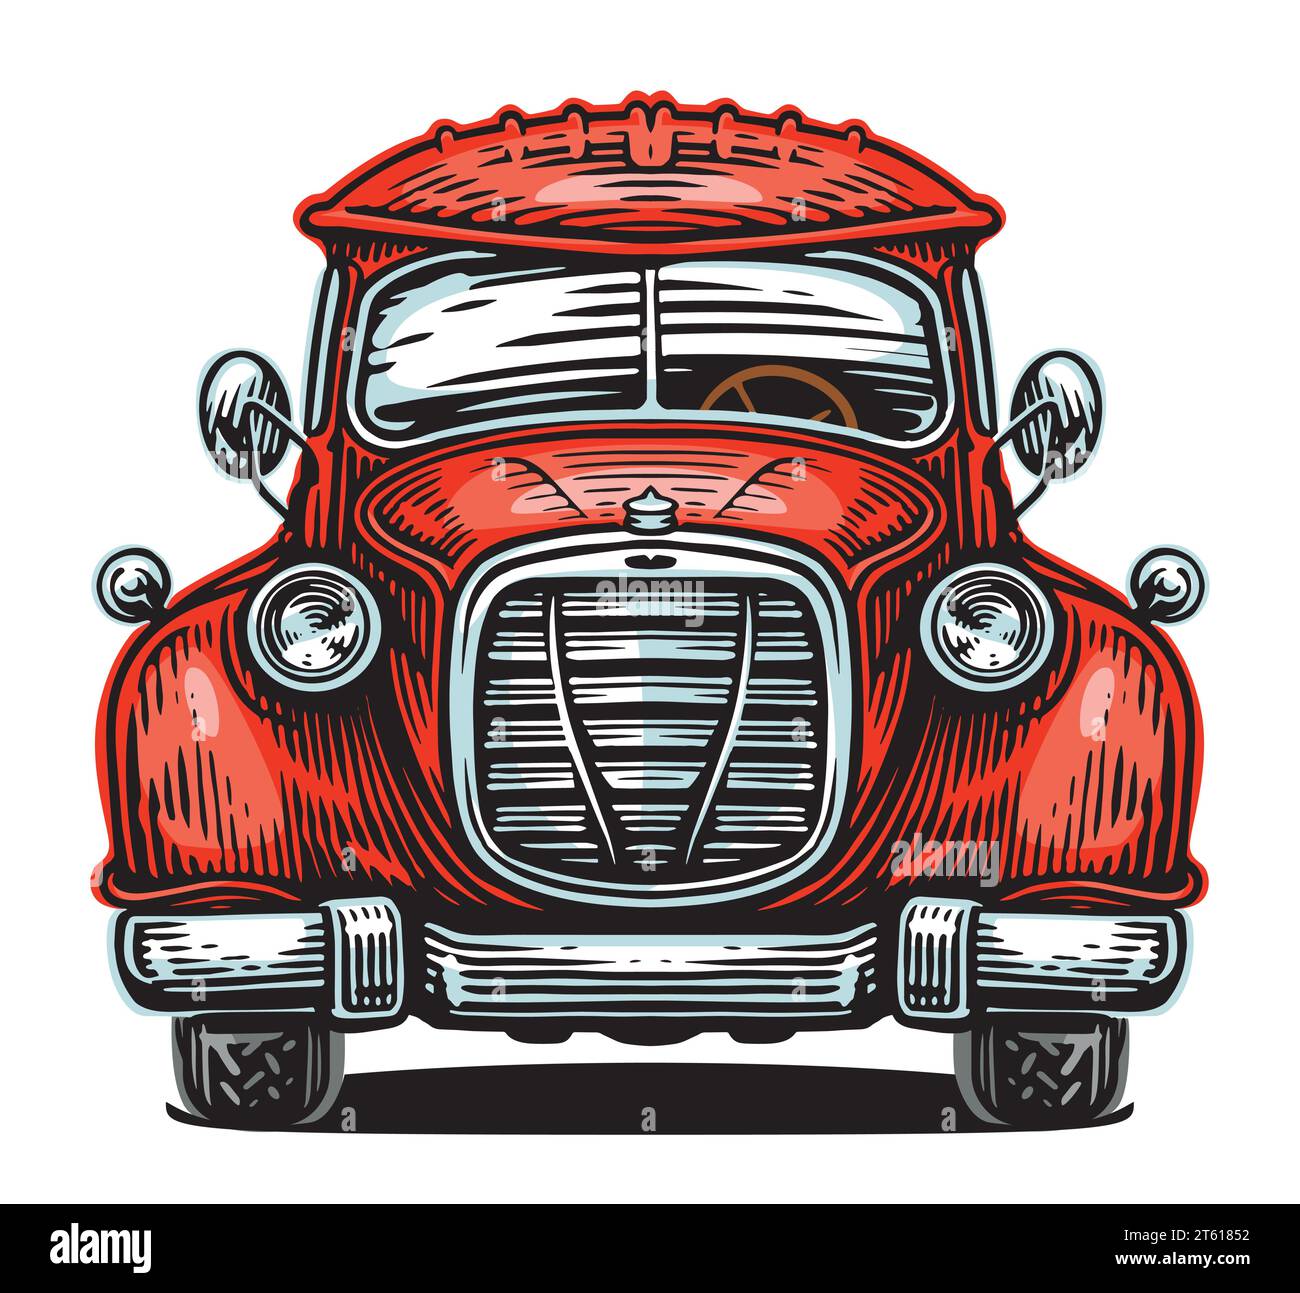 Rotes Retro-Auto von vorne. Vektorillustration für Oldtimer Stock Vektor